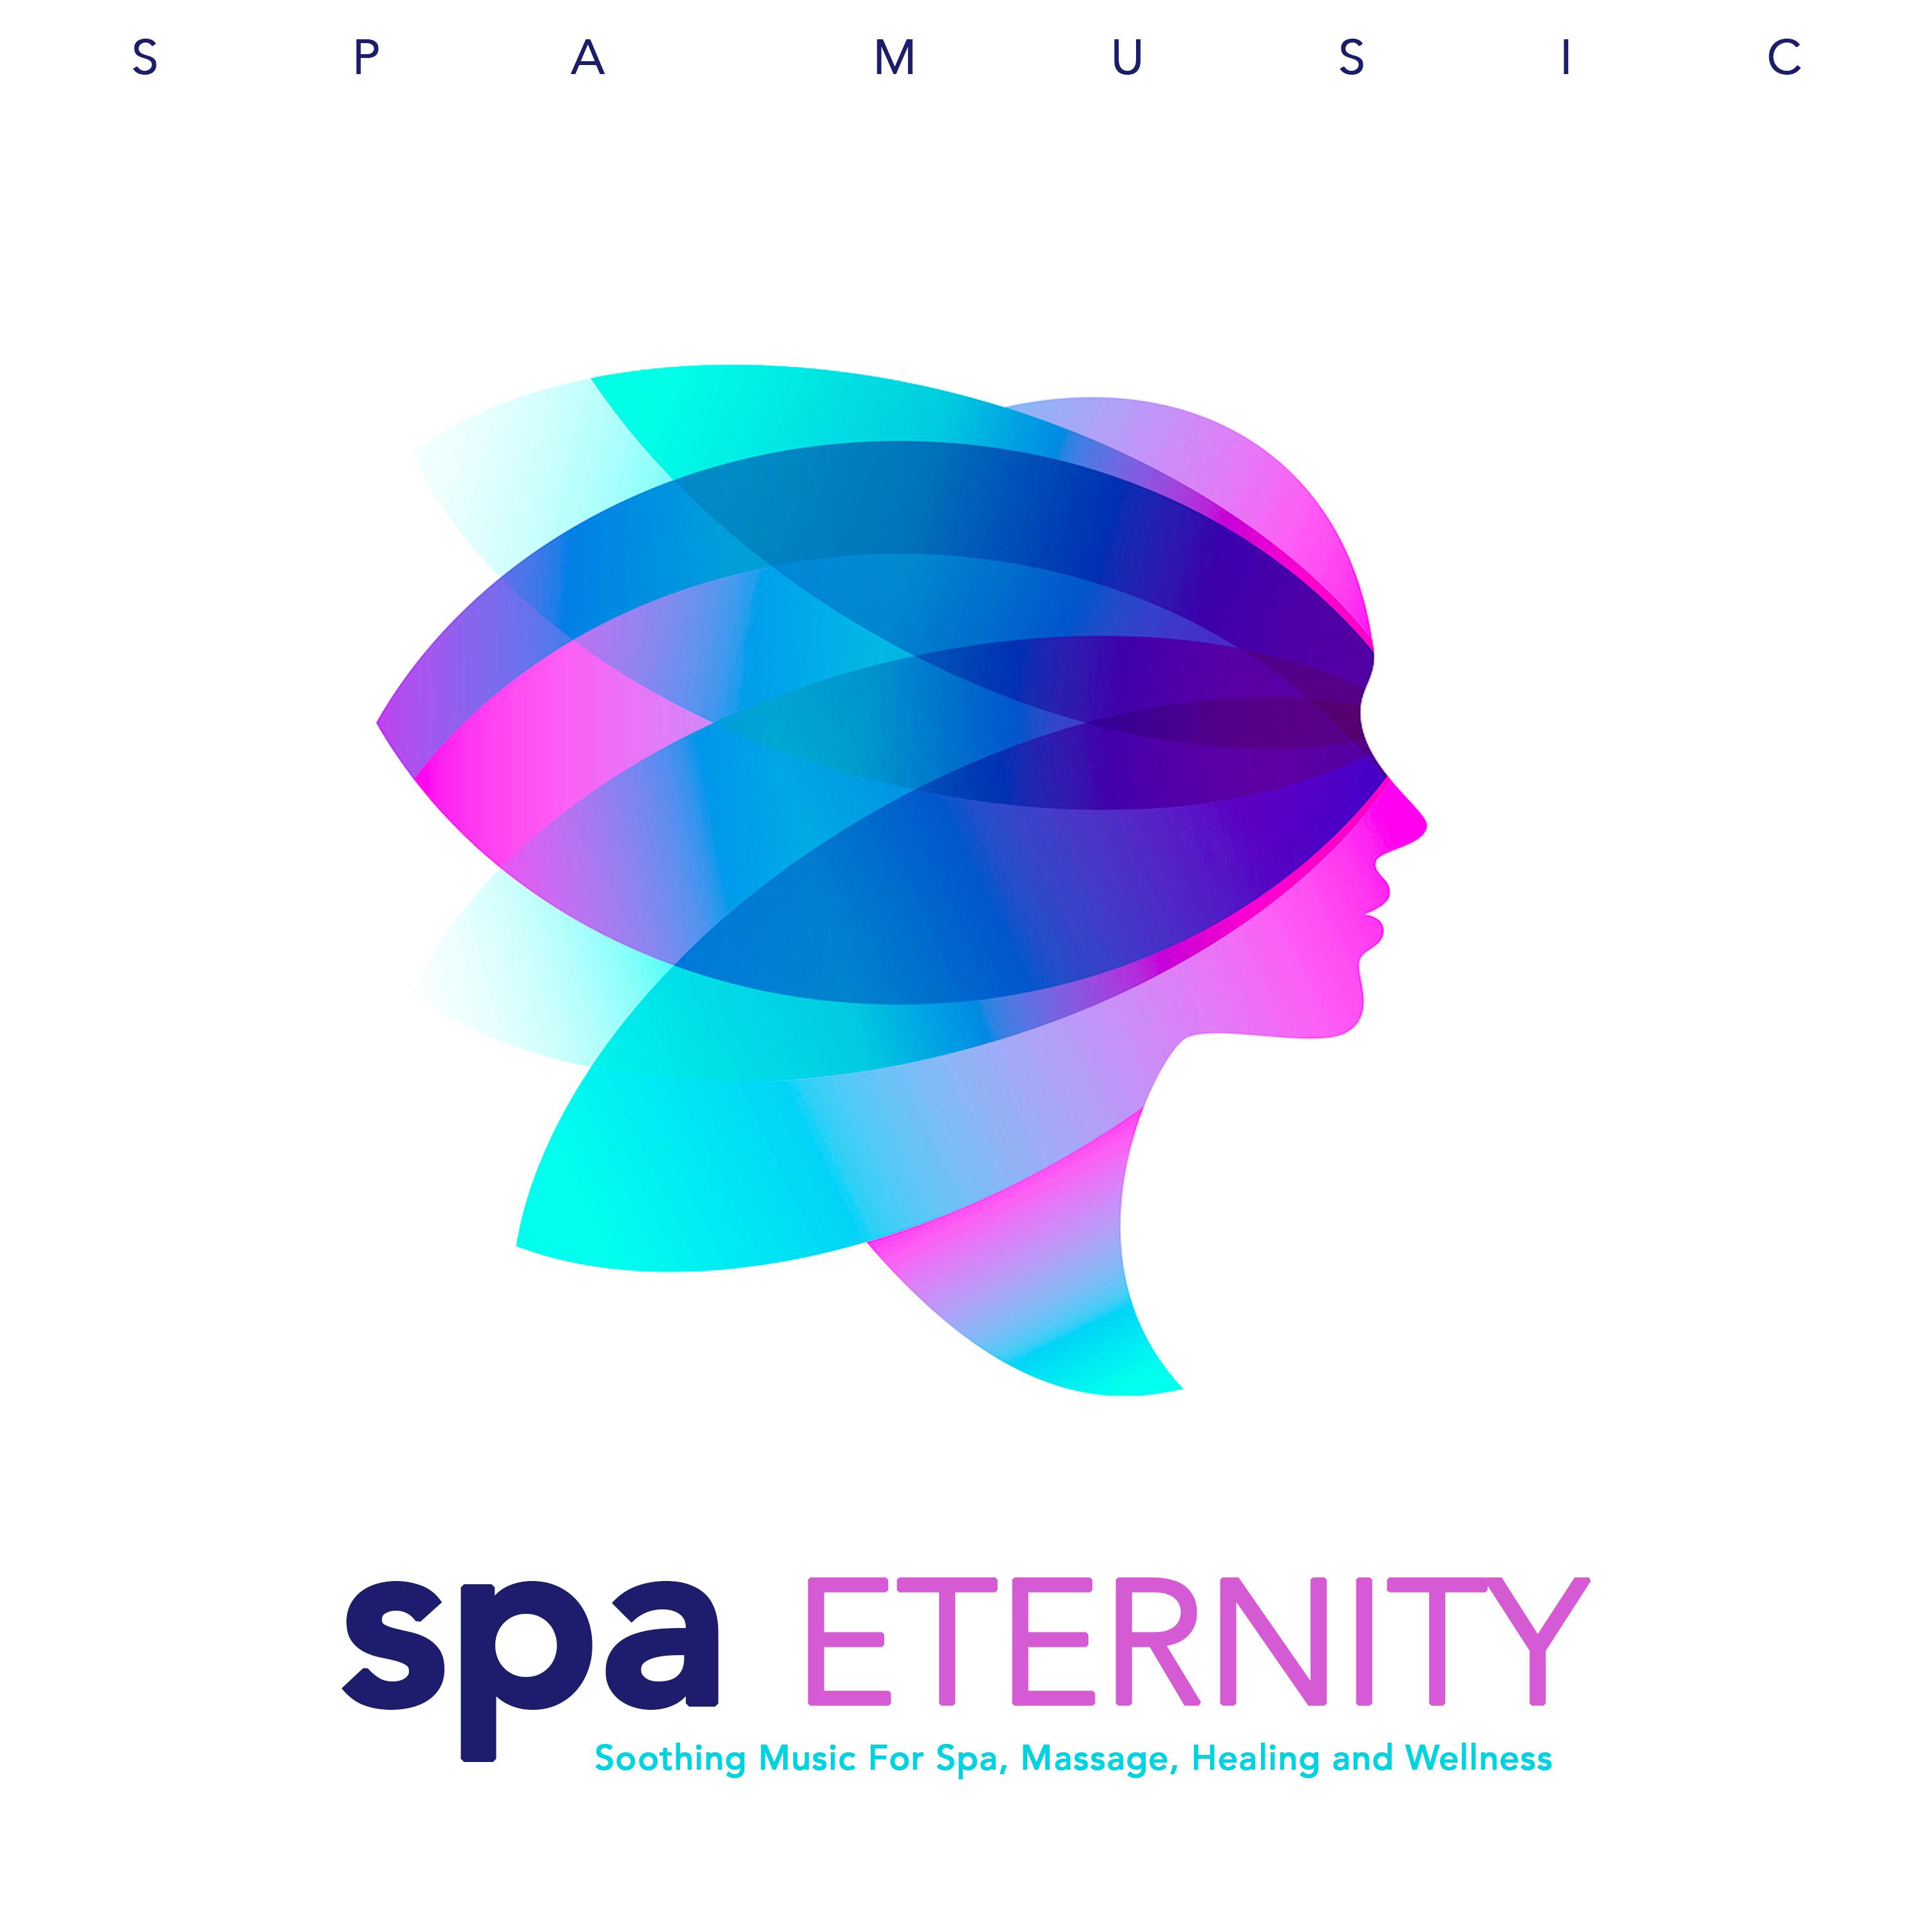 Spa Eternity